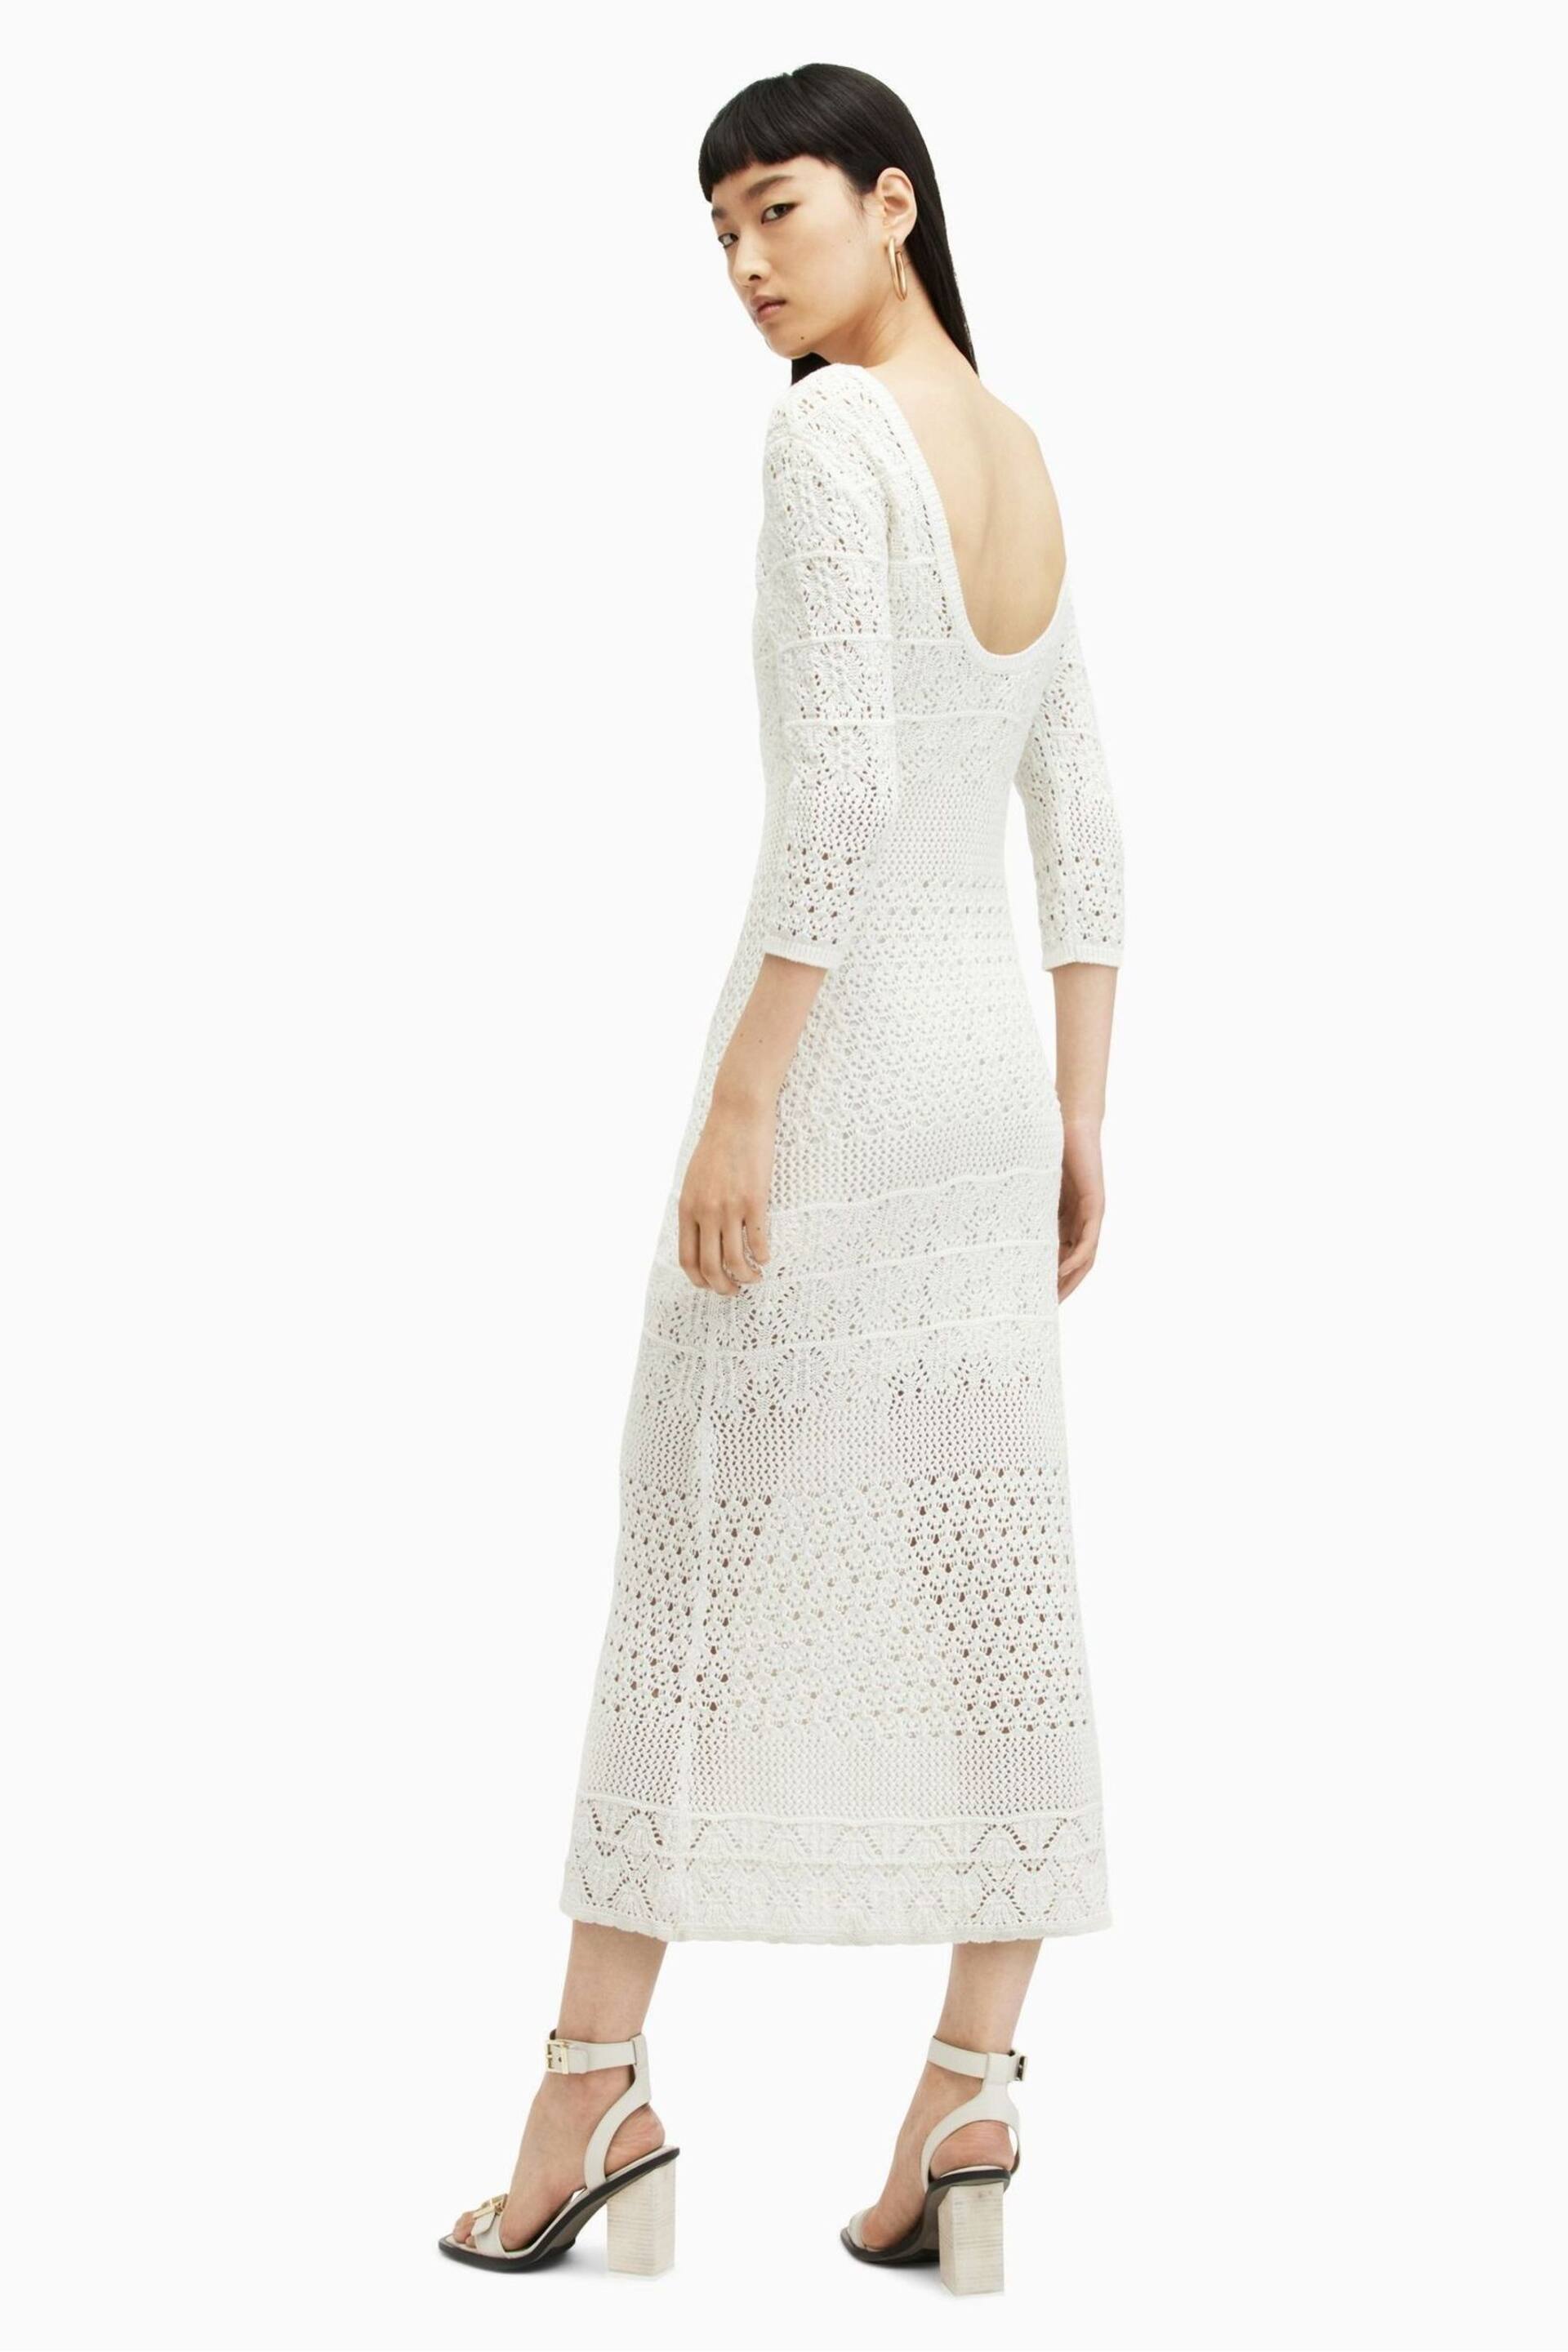 AllSaints White Briar Dress - Image 2 of 7